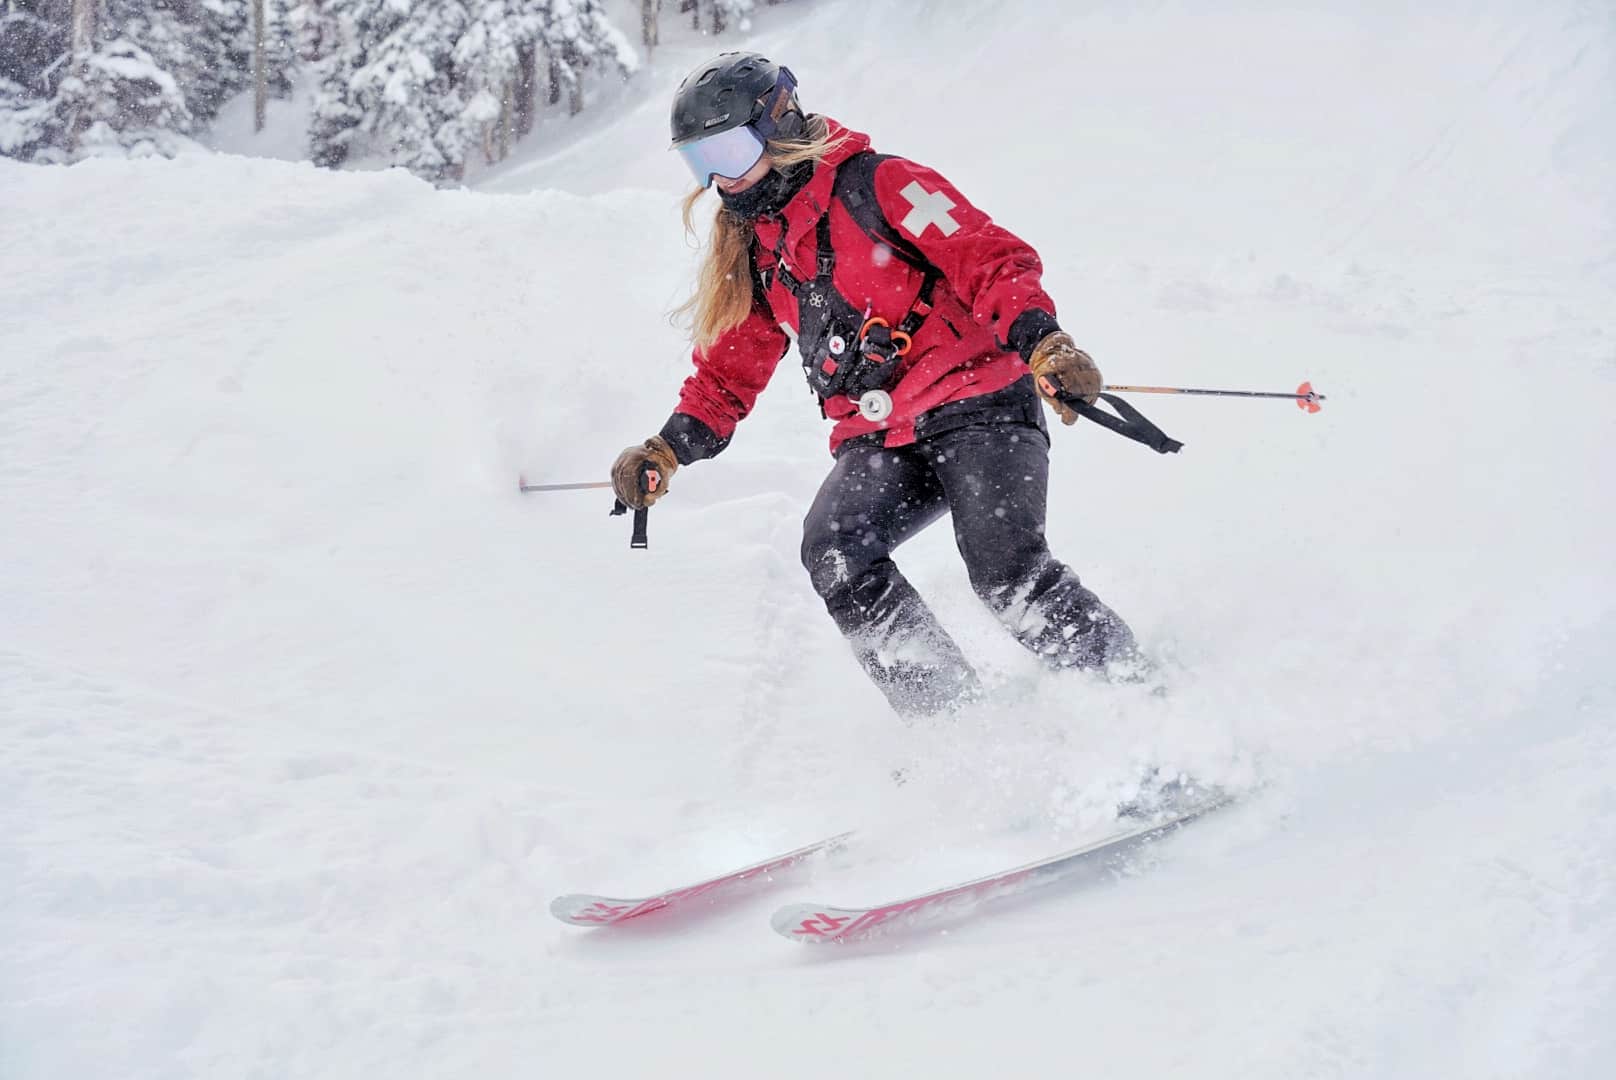 Female ski patroller shredding